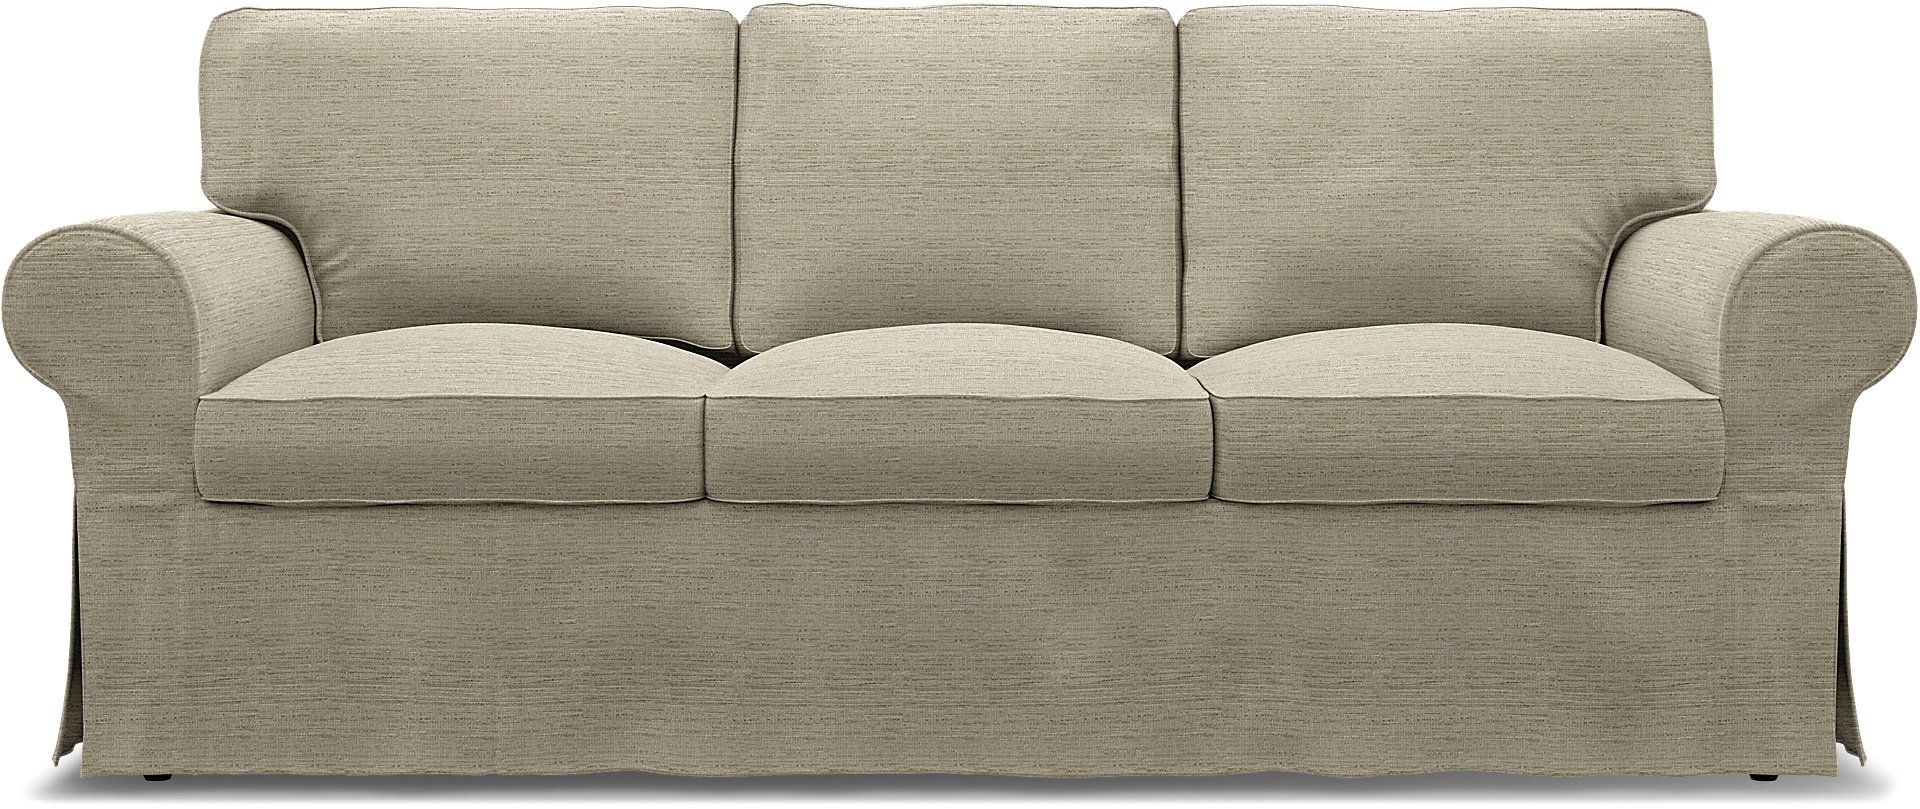 IKEA - Ektorp 3 Seater Sofa Bed Cover, Light Sand, Boucle & Texture - Bemz